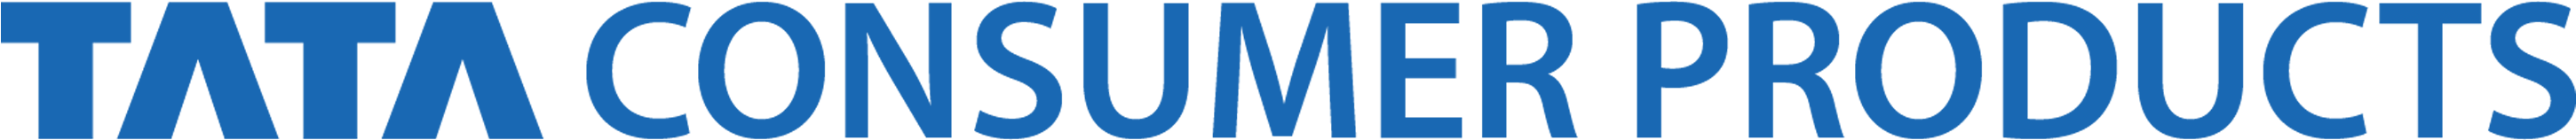 Tata Consumer Products Logo PNG image